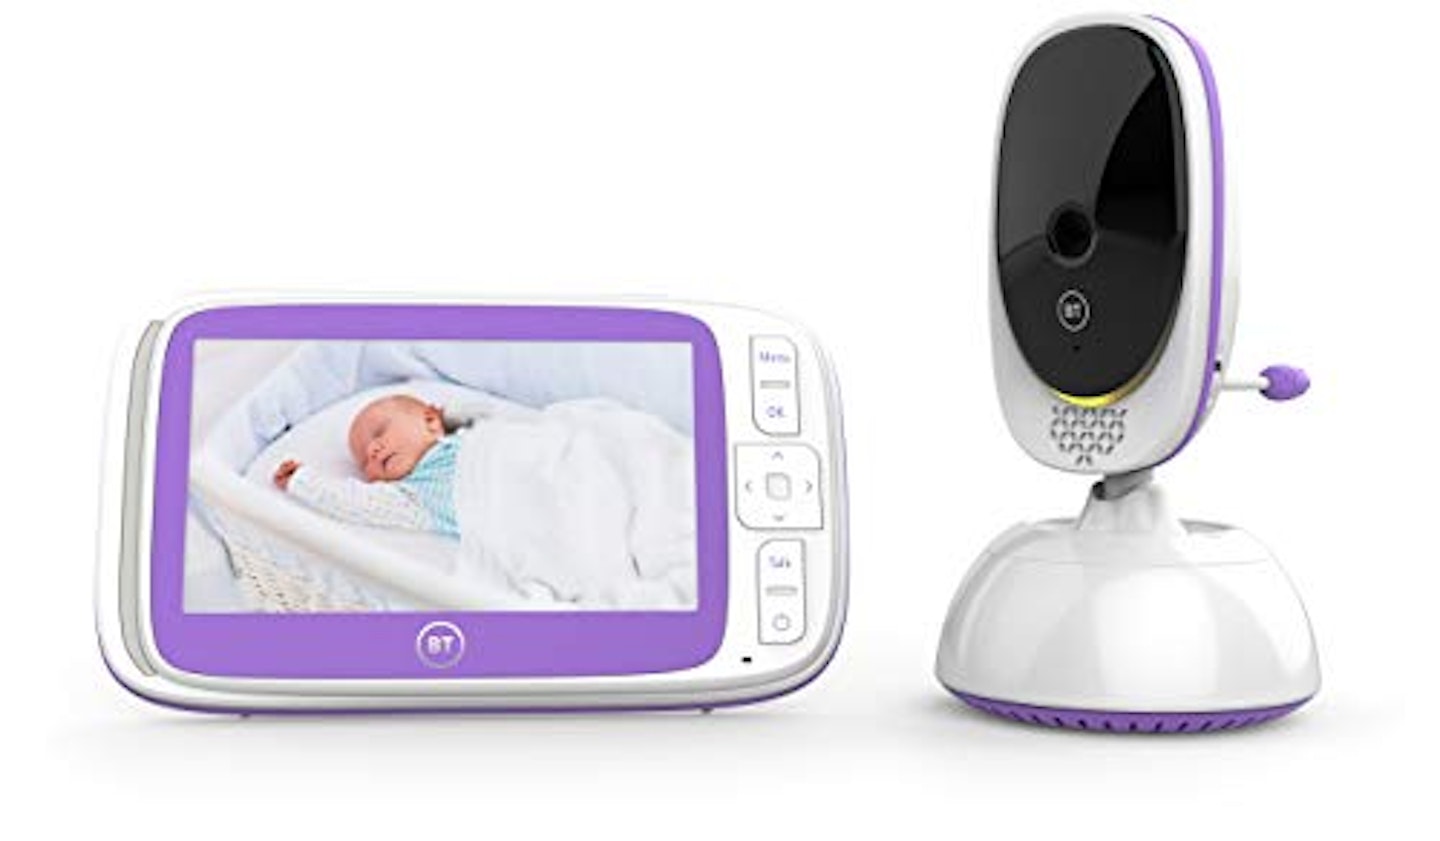 BT Video Baby Monitor 6000 